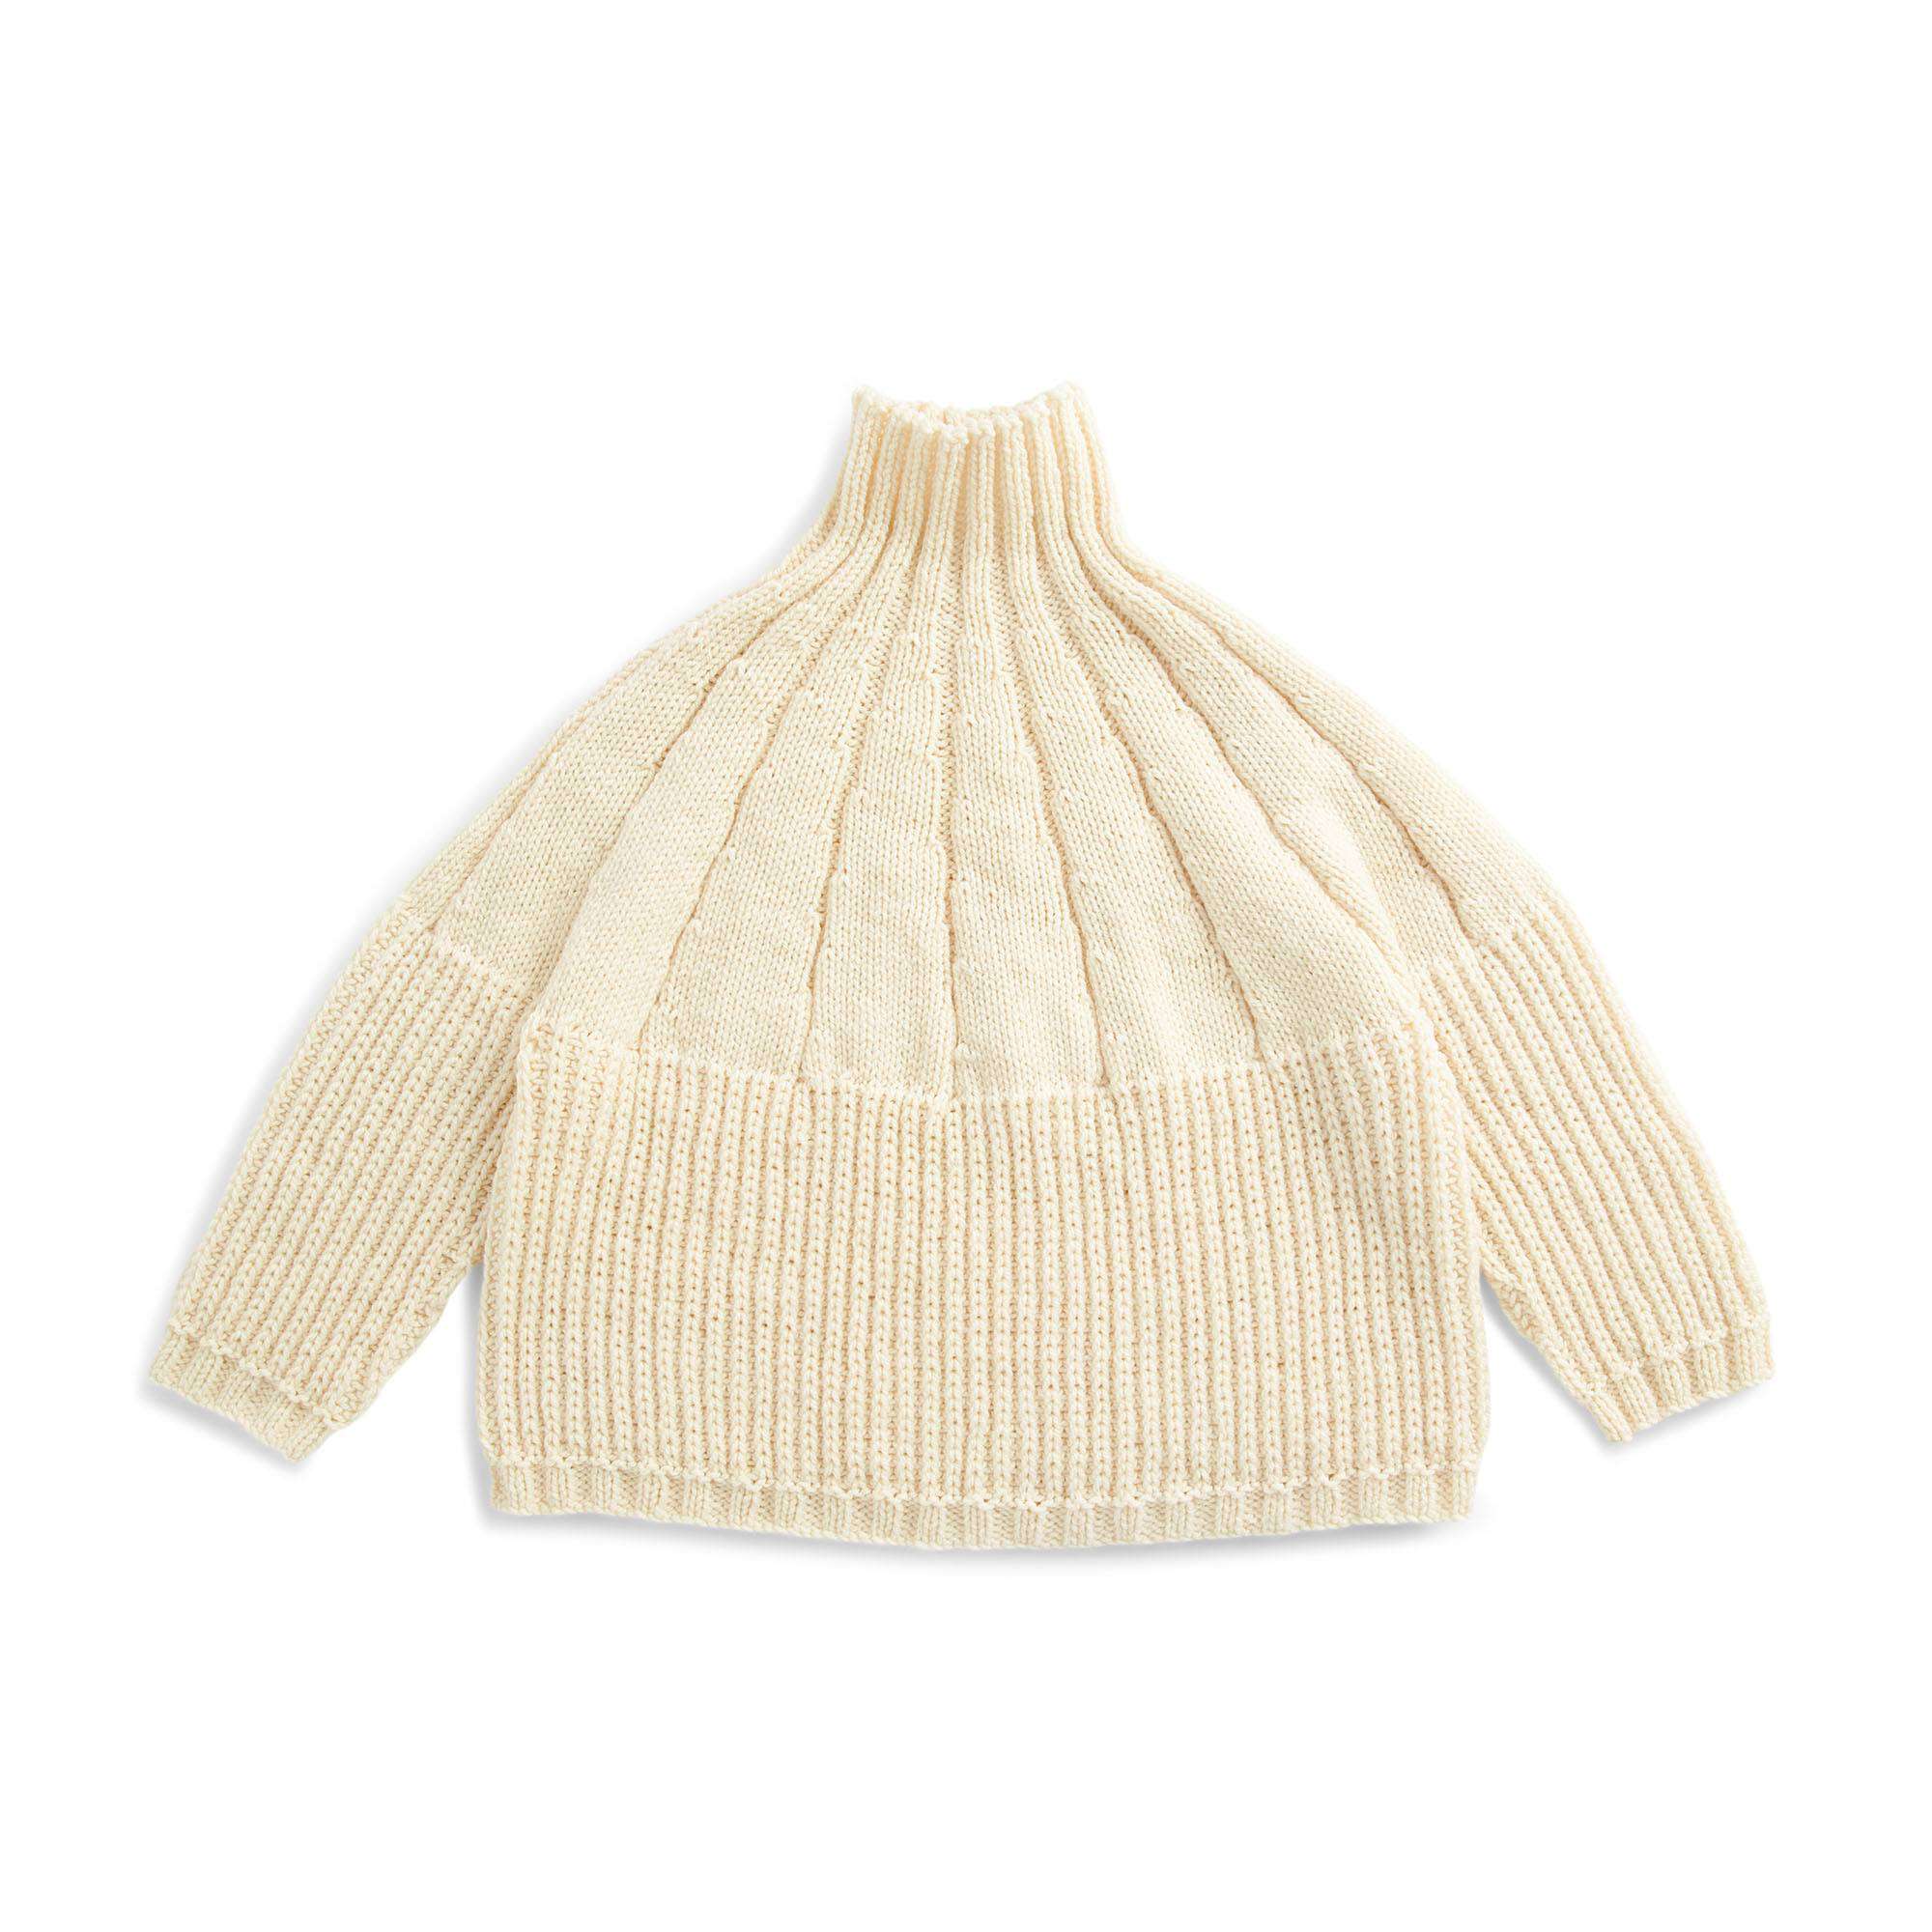 Patons Rib Knit Top Down Pullover | Yarnspirations